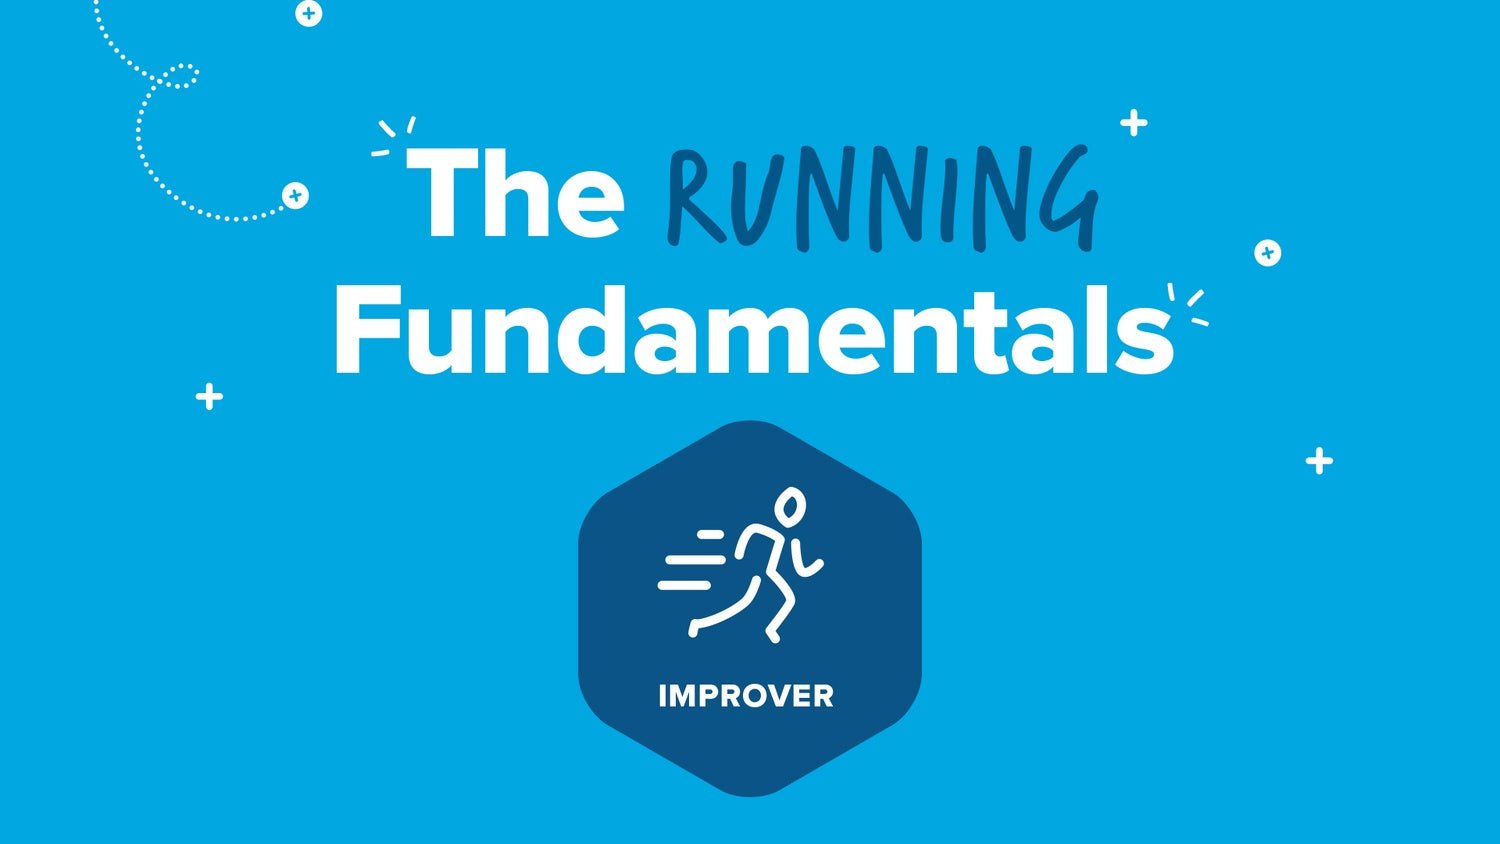 The Running Fundamentals - Improver - PBCo.